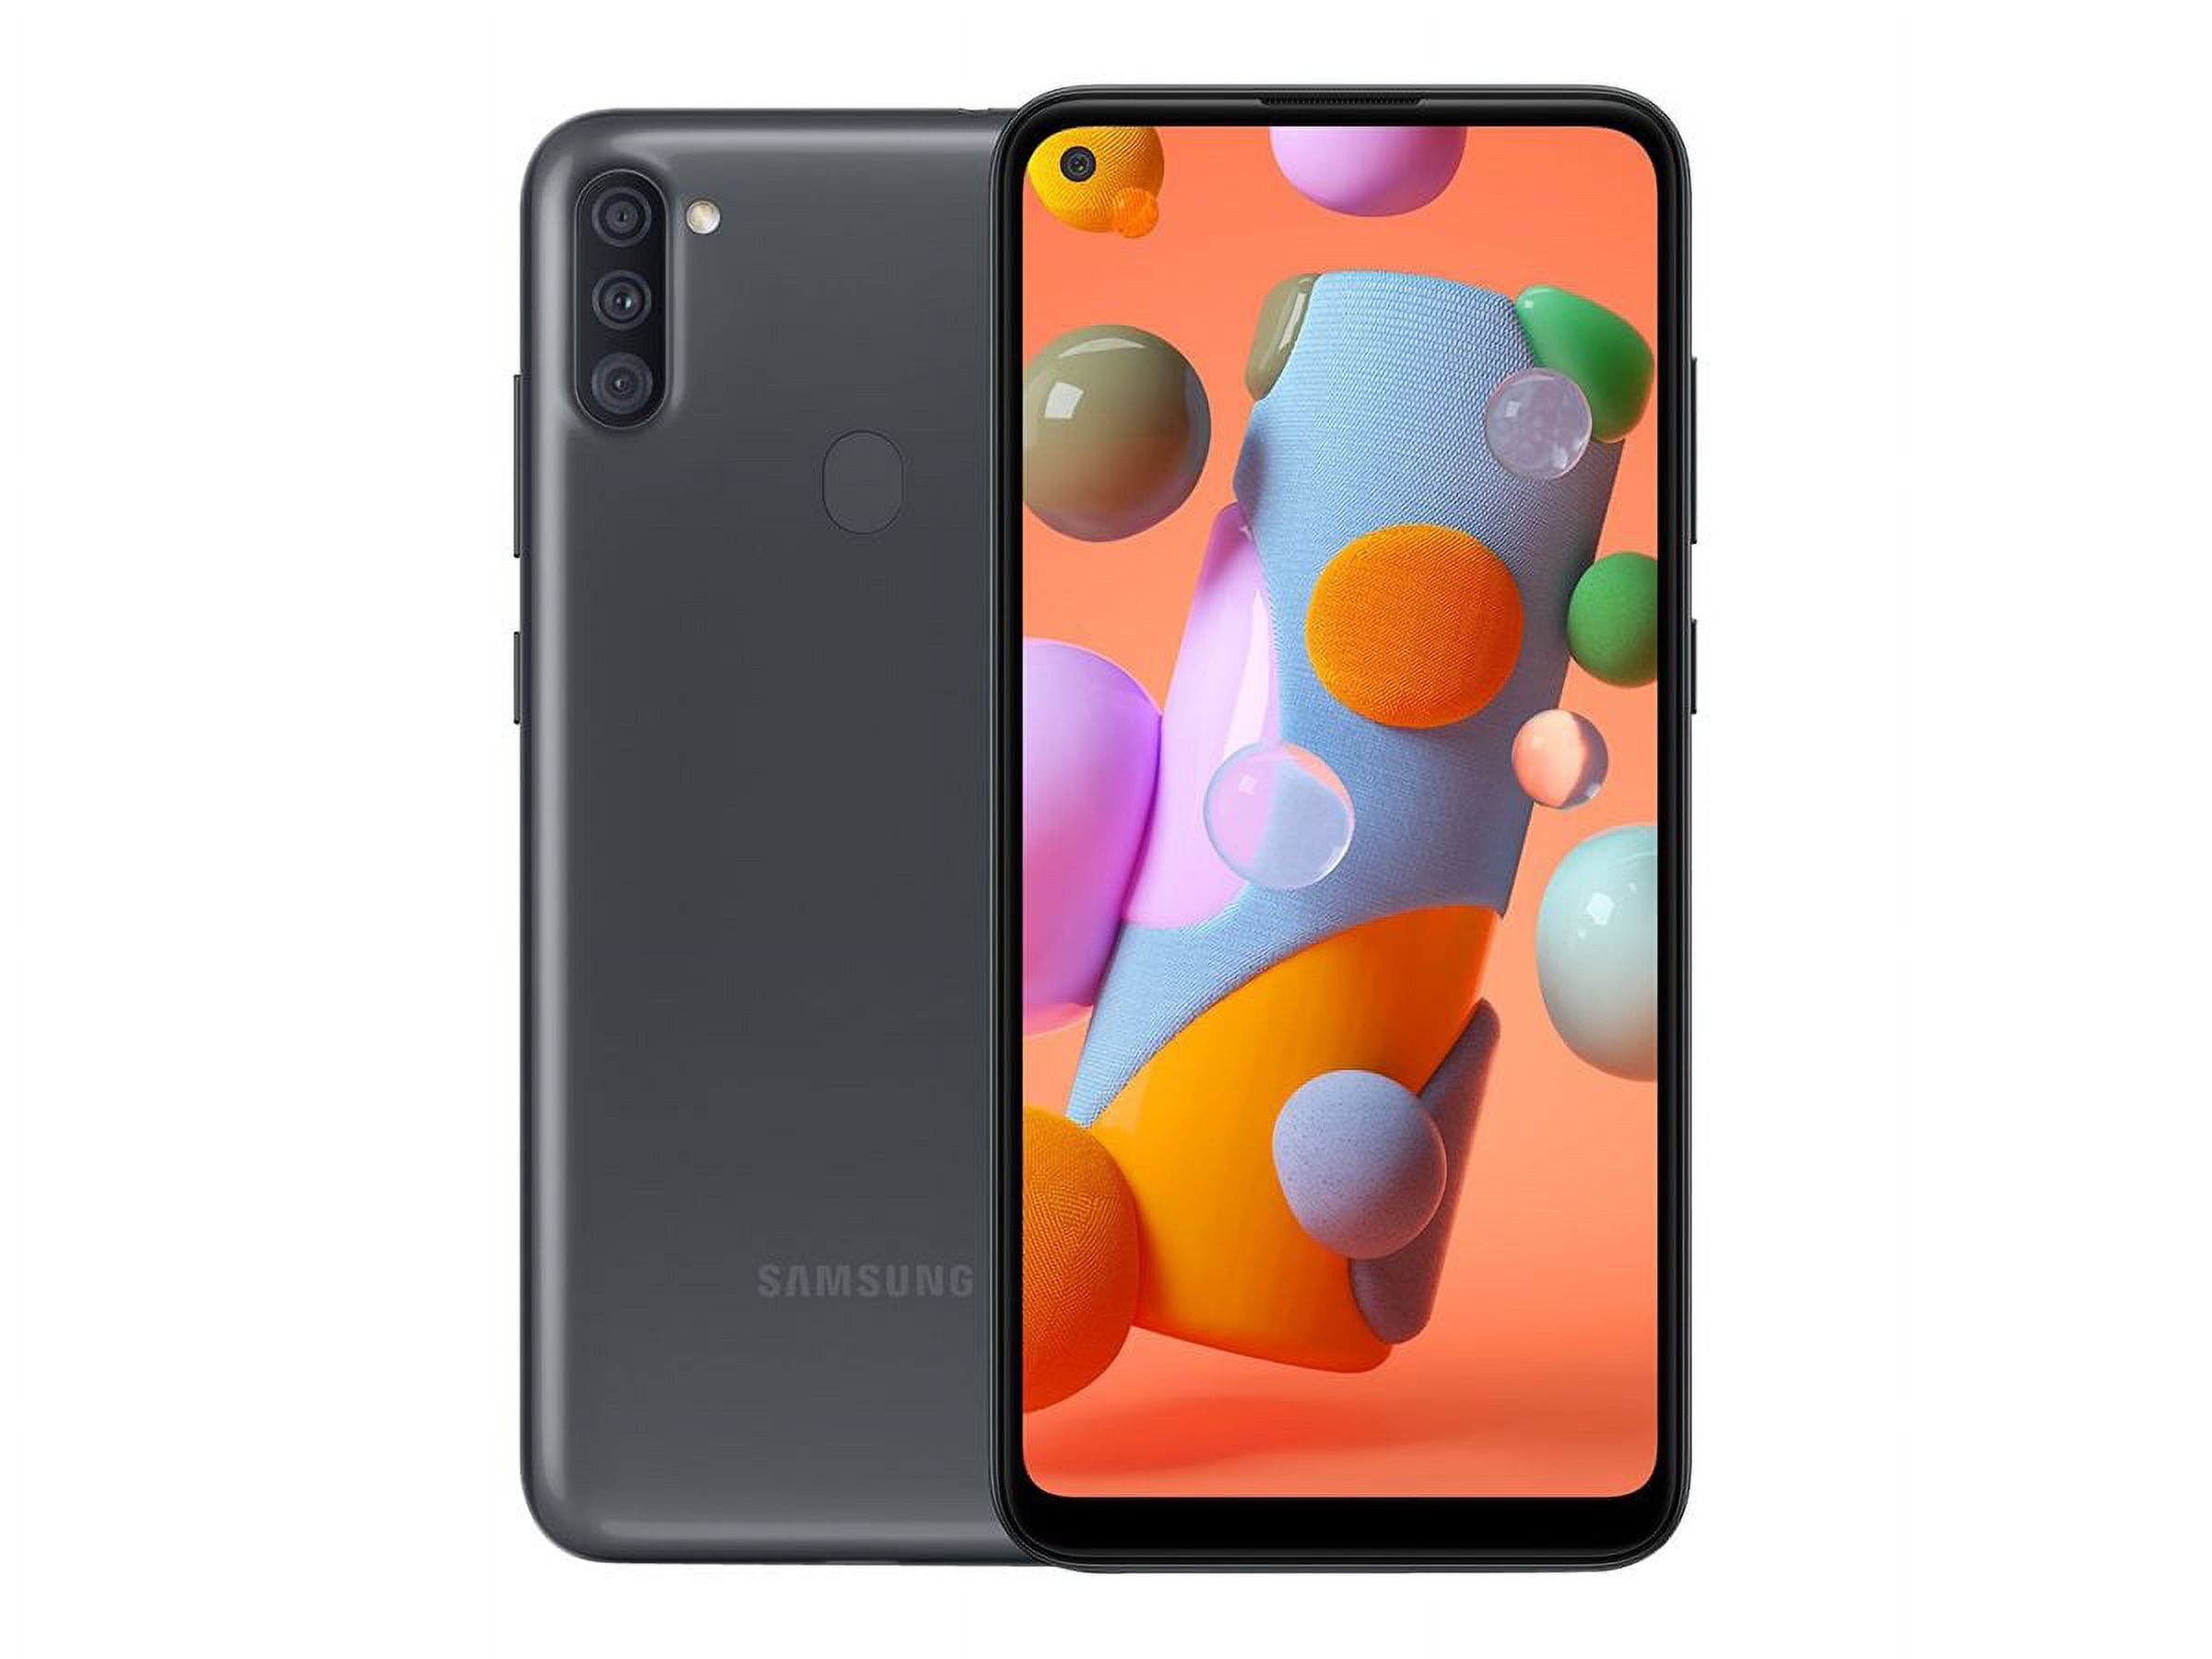 Samsung Galaxy A11 - Smartphone - 4G LTE - 32 GB - microSD slot - 6.4" - 1560 x 720 pixels - PLS TFT - RAM 2 GB (8 MP front camera) - 3x rear cameras - Android - Boost - black - image 2 of 6